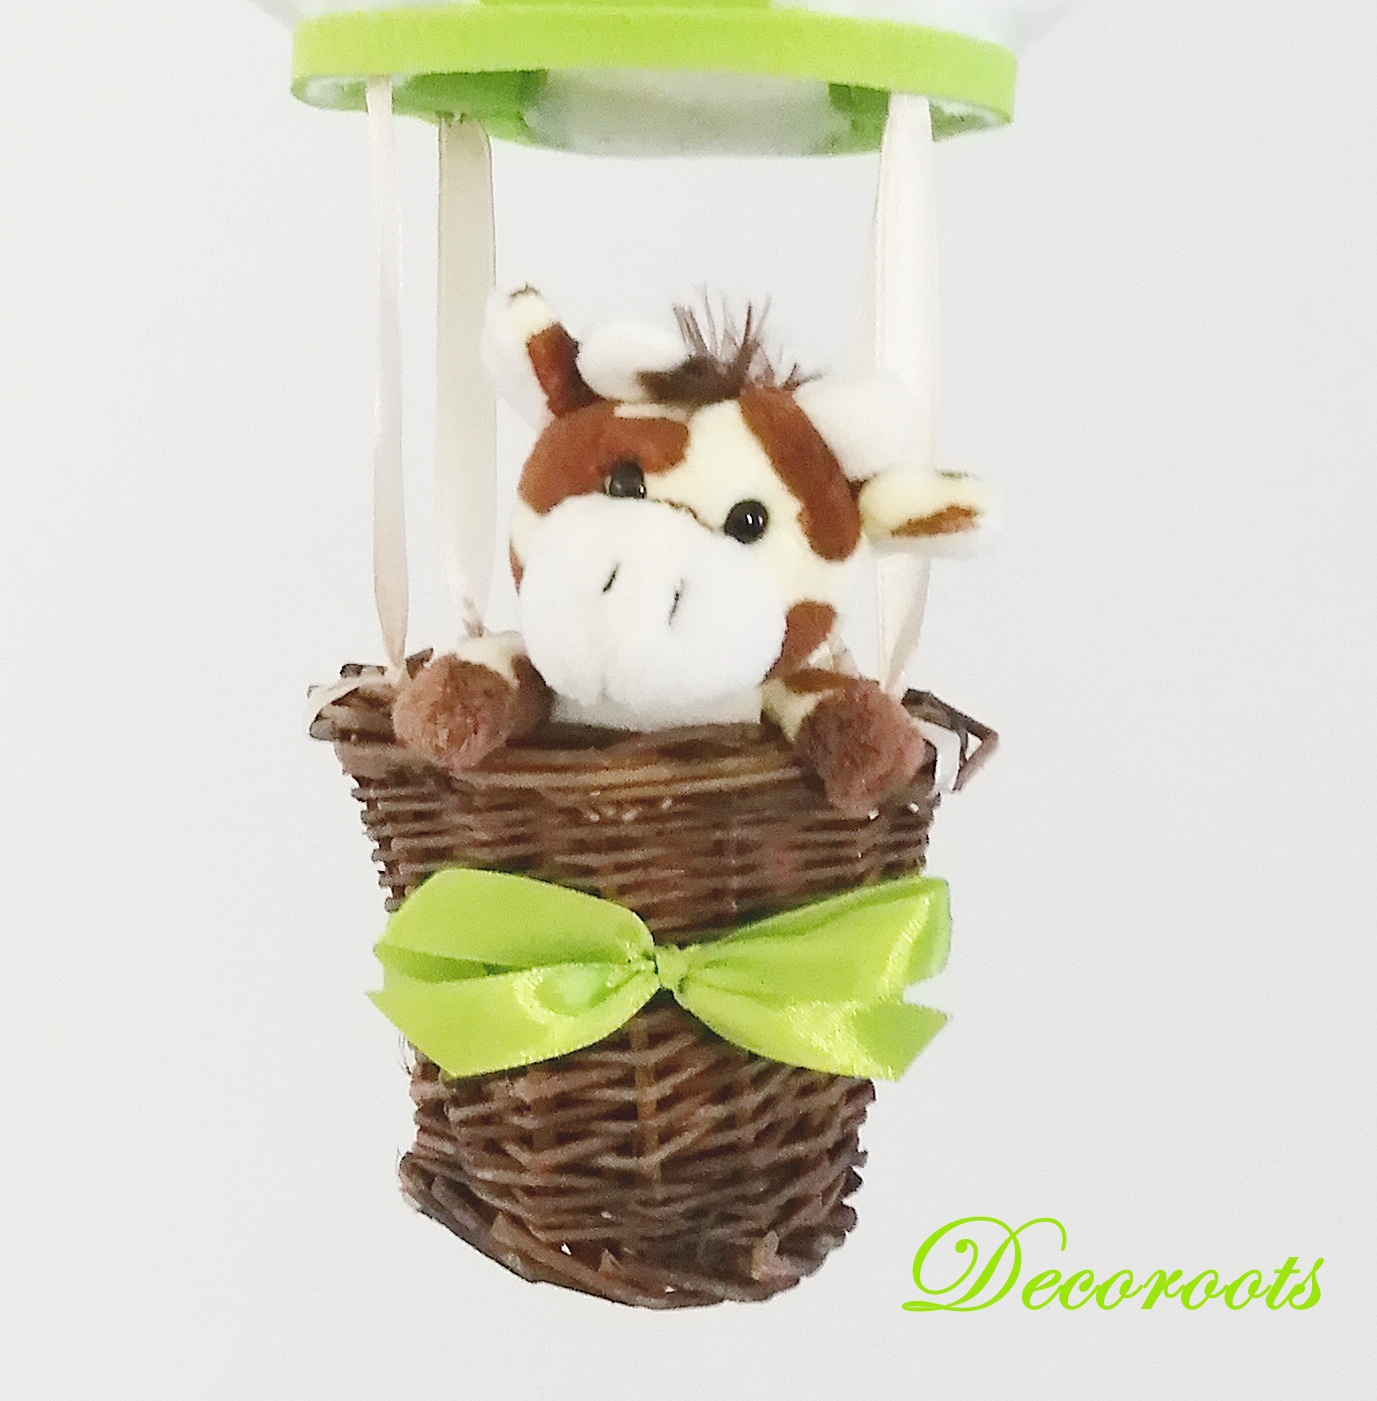 montgolfiere-decorative-jungle-safari-girafe-enfant-bebe-suspension-mobile-vert anis-beige-mixte-chambre-artisanal-ecru